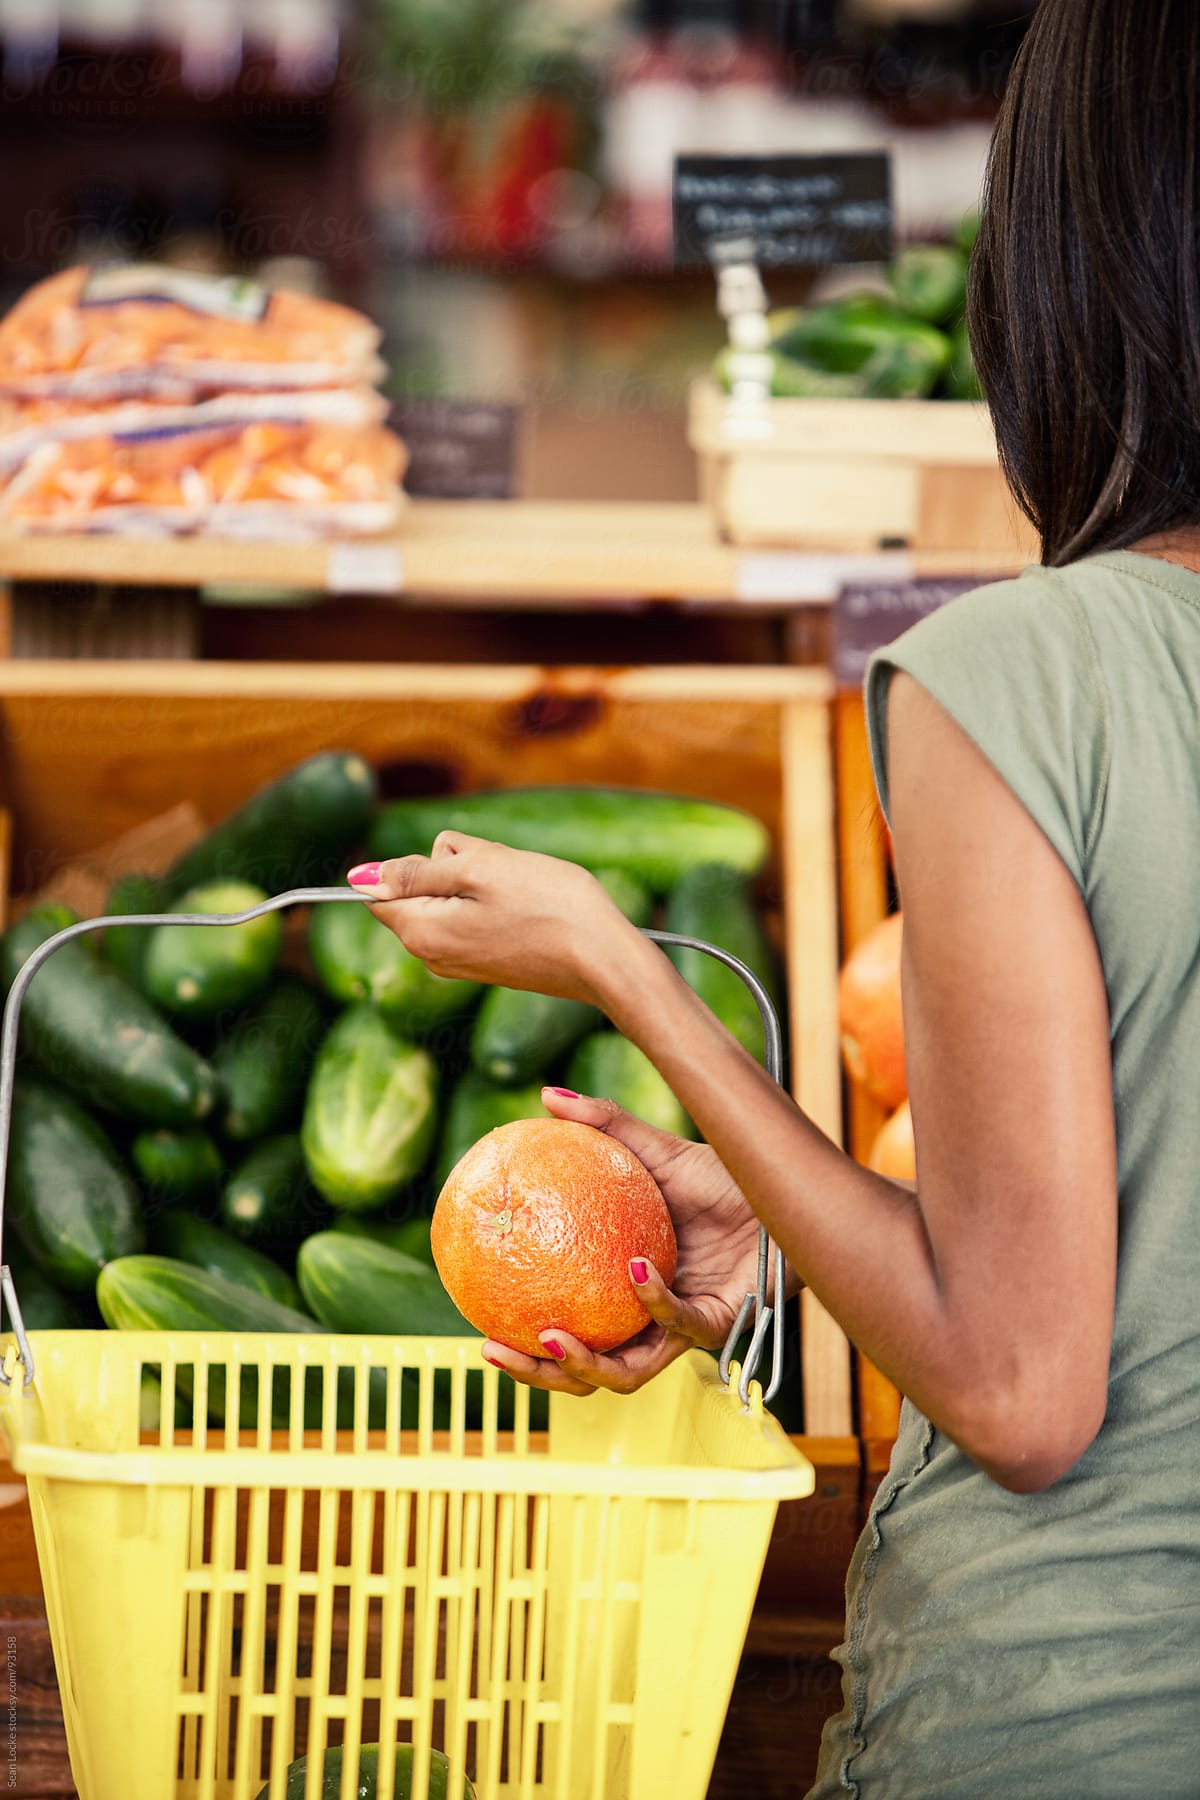 Market: Woman Puts Grapefruit Into Basket